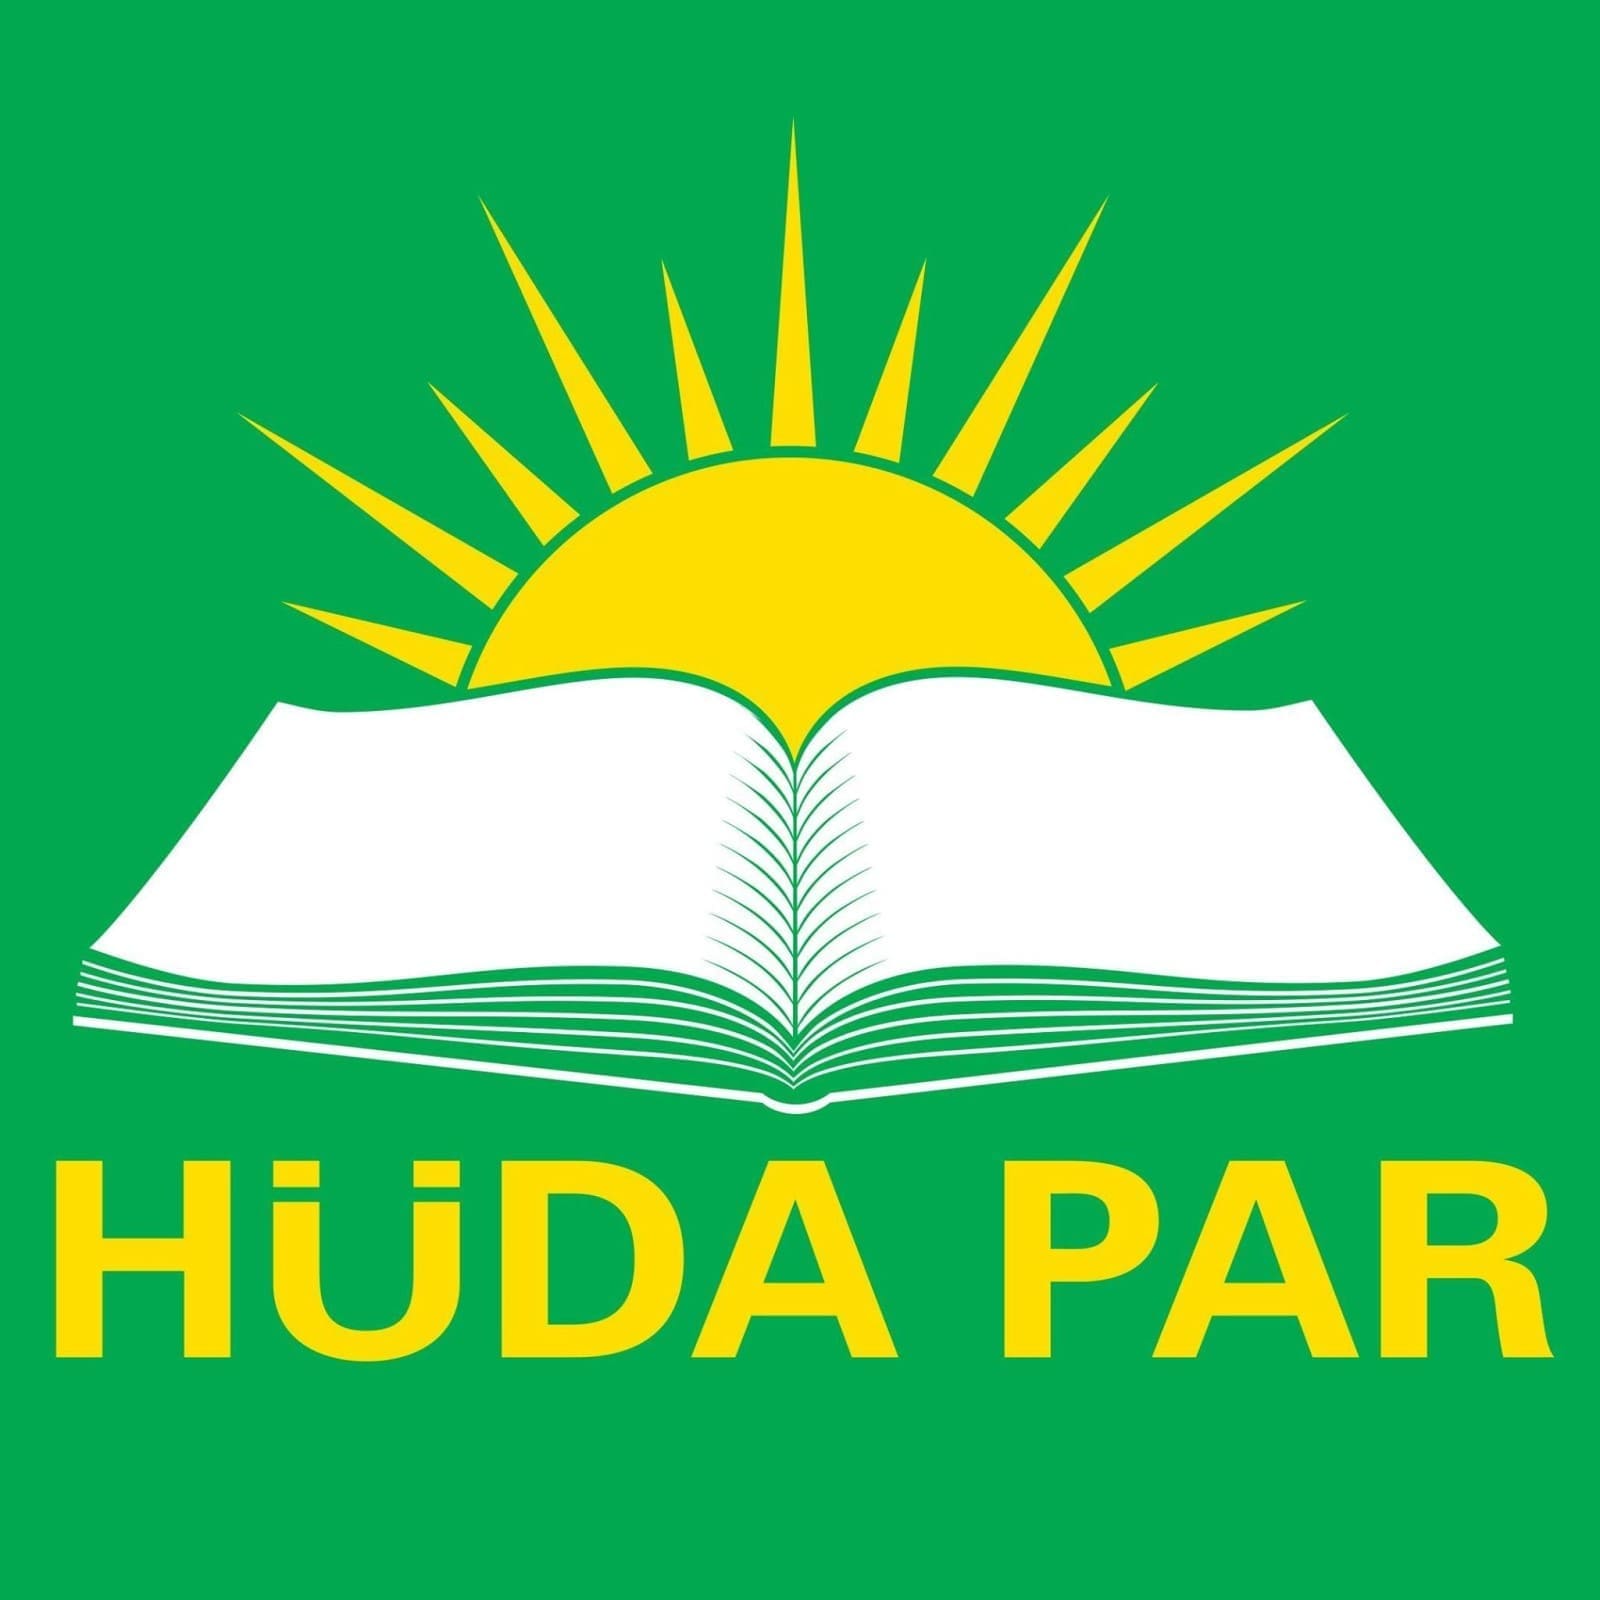 Hüda Par Logo (Hür Dava Partisi) png